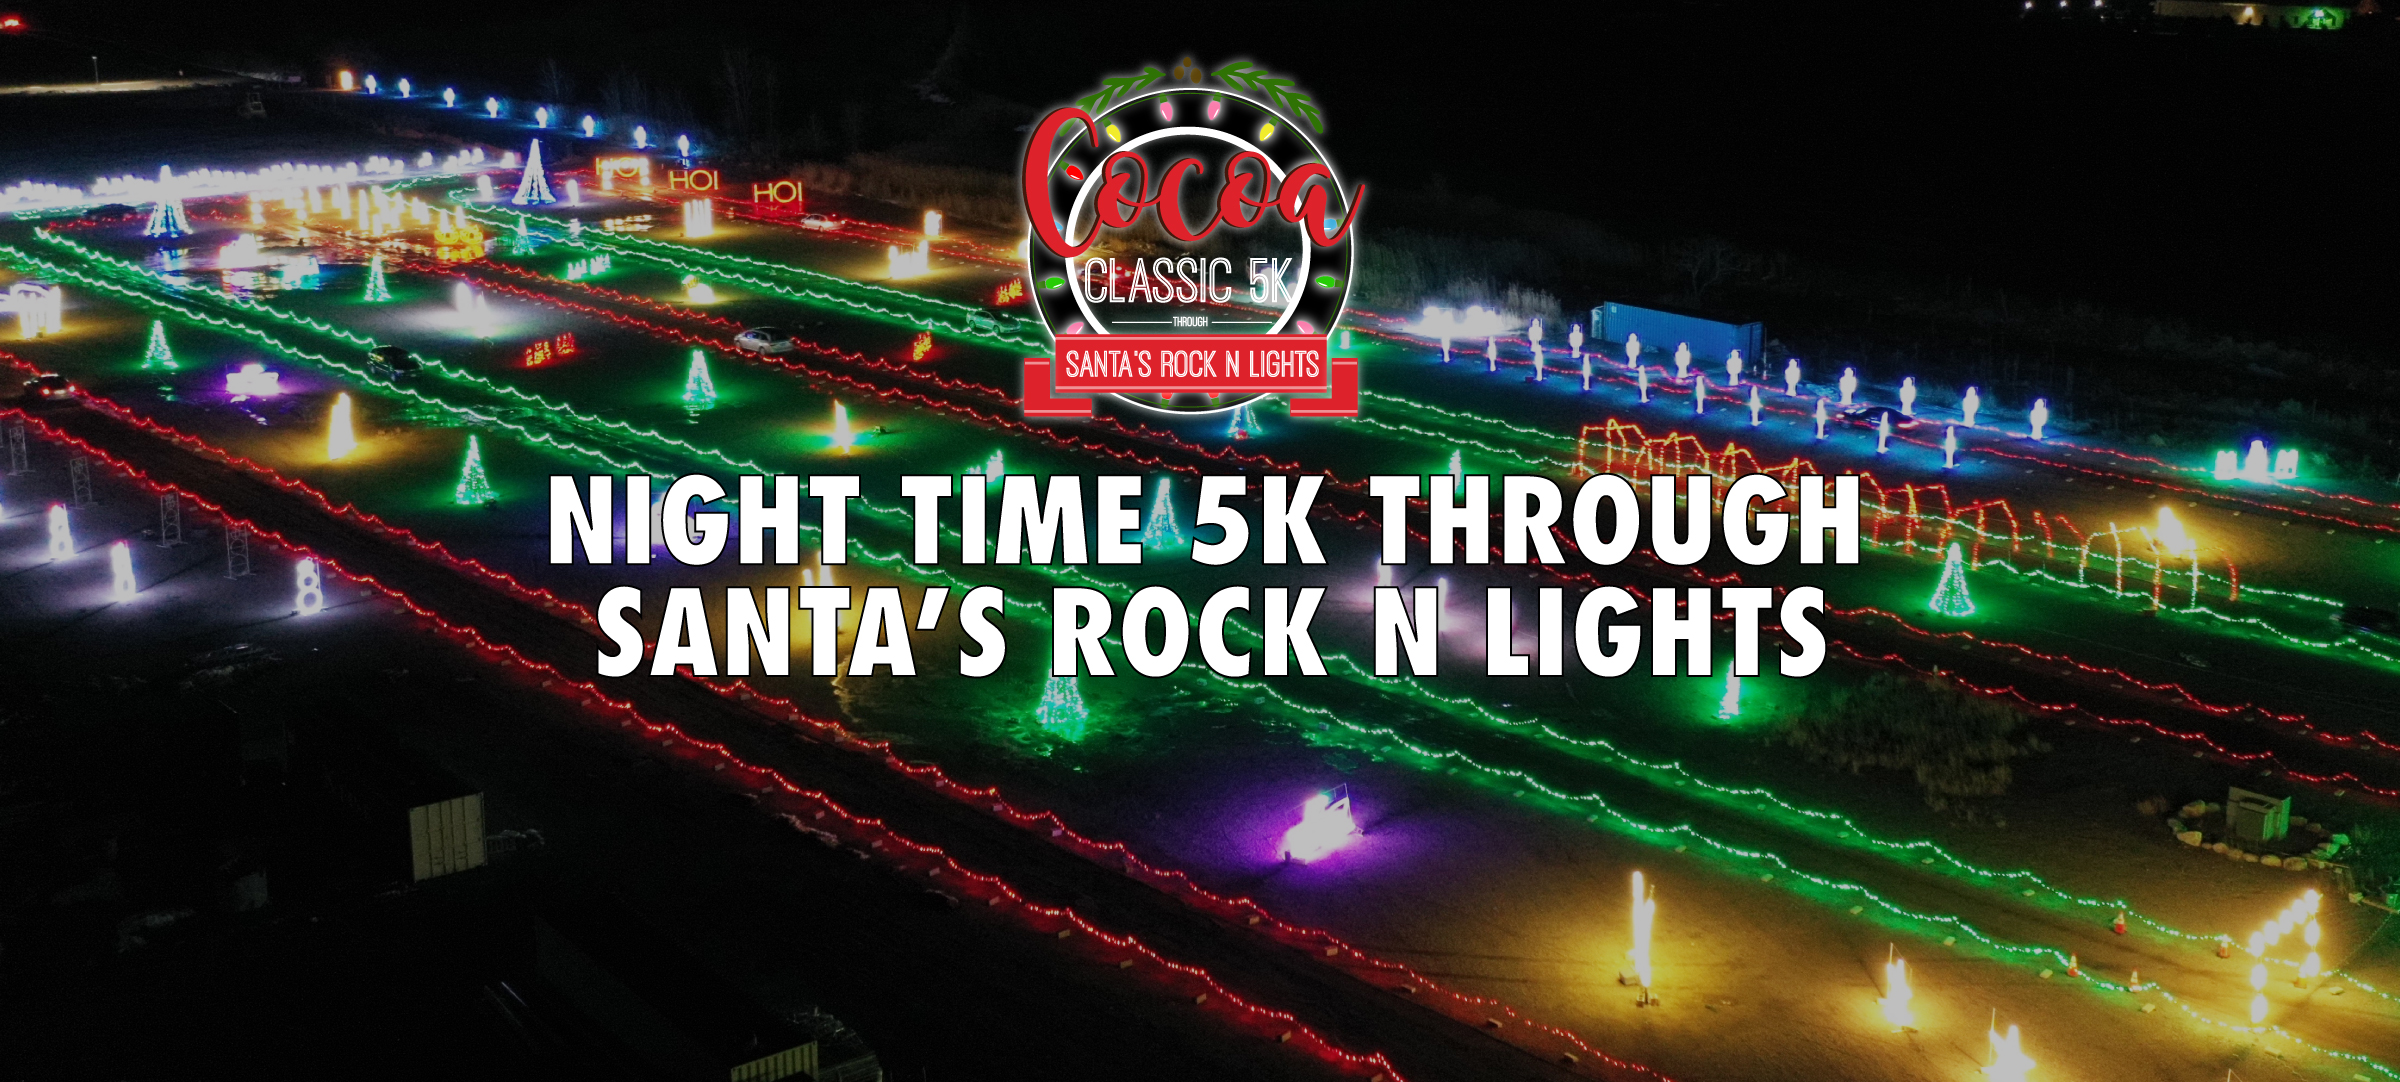 Cocoa Classic 5K through Santa’s Rock N Lights